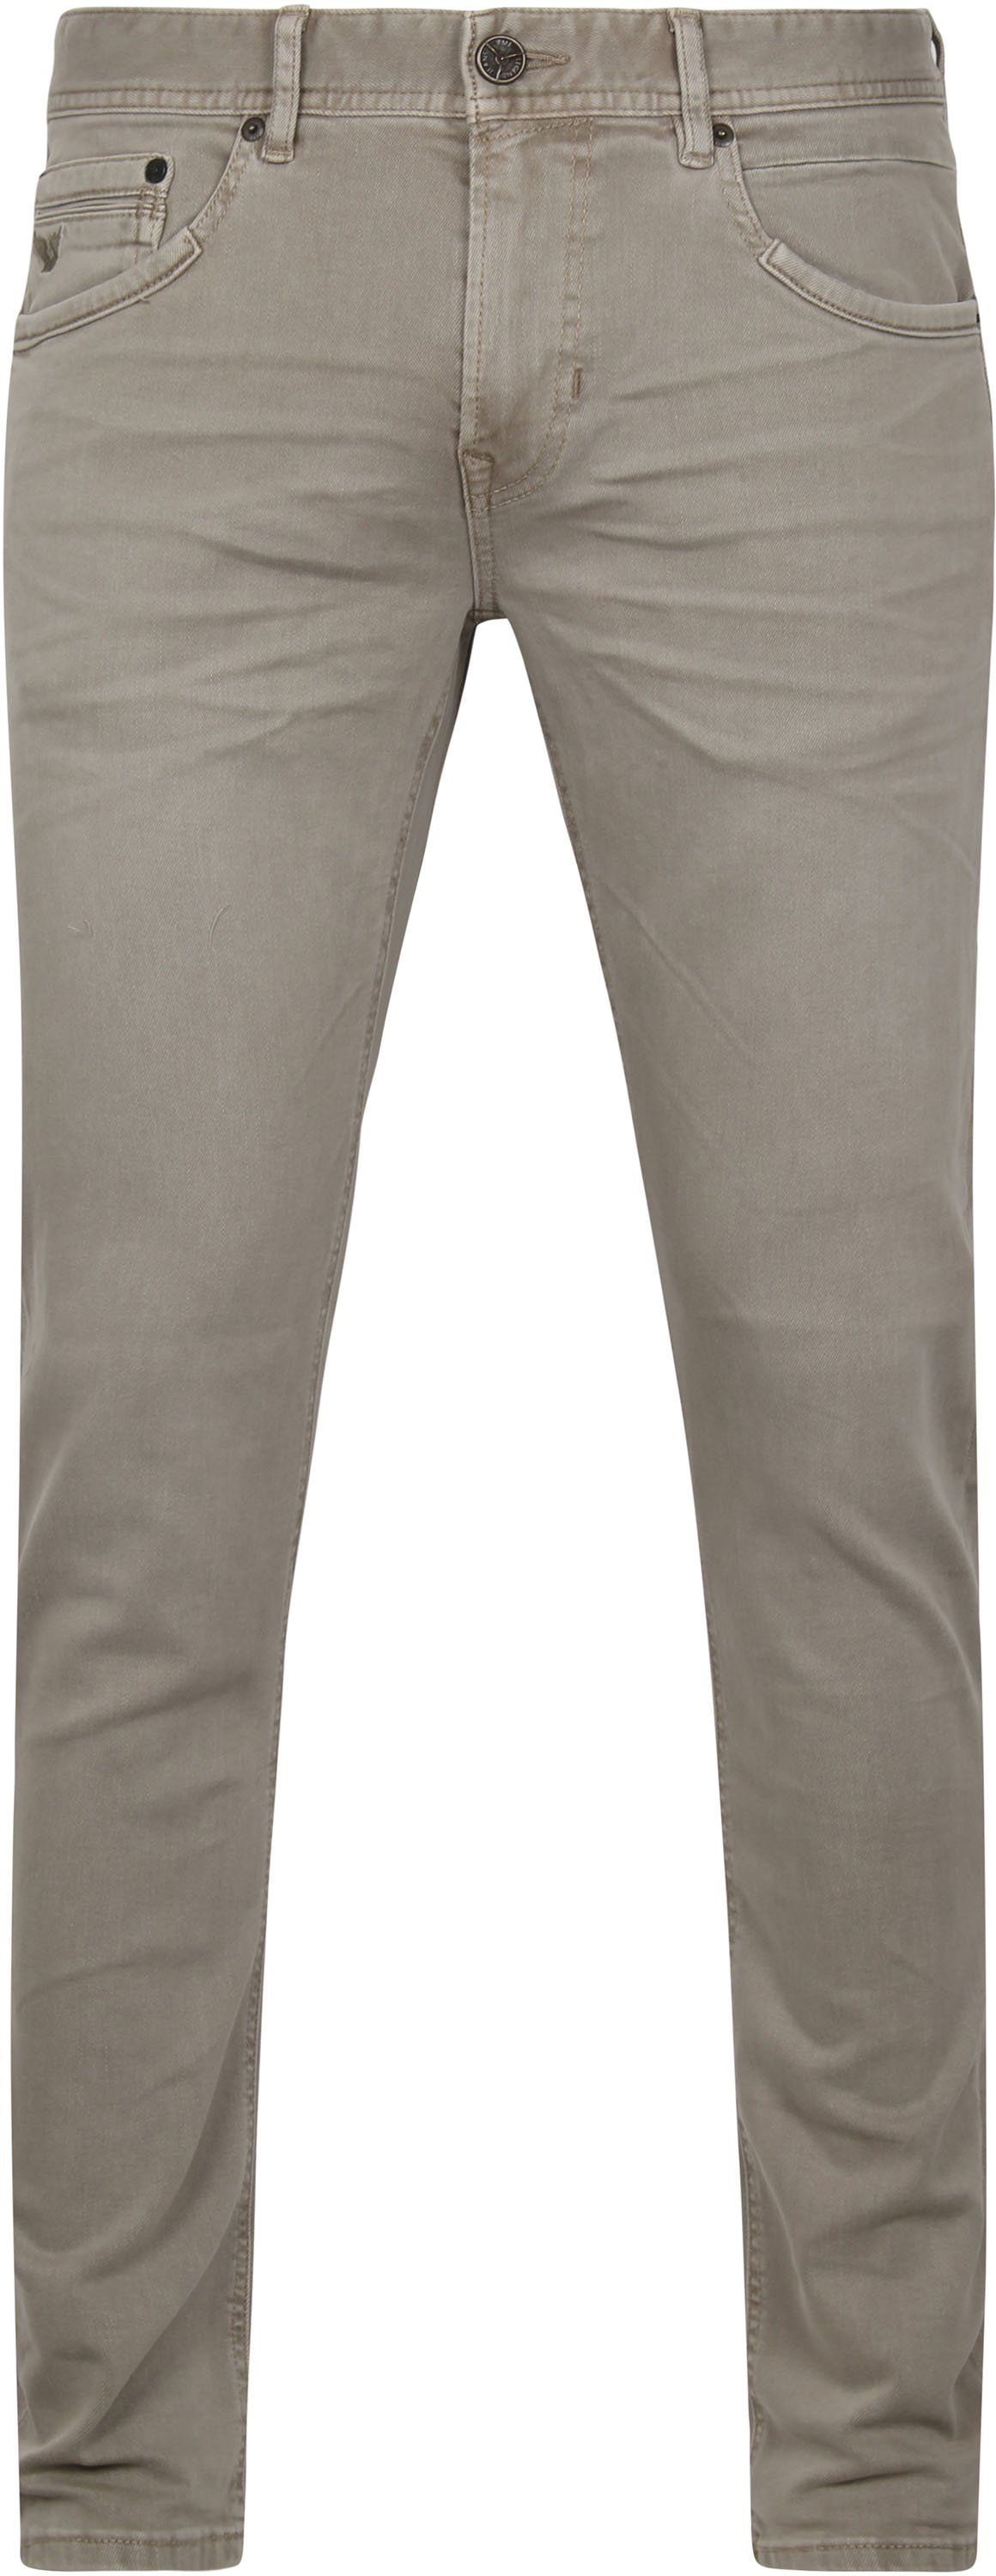 PME Legend Tailwheel Jeans Grey size W 38